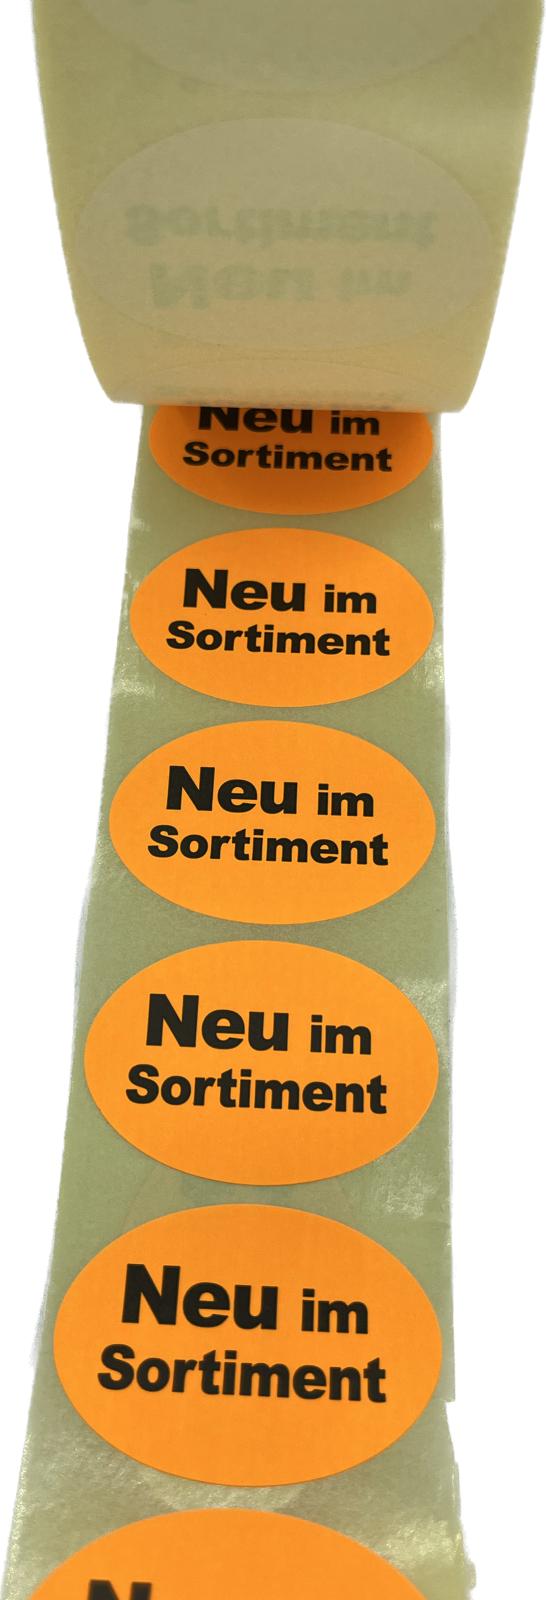 Haftetiketten "Neu im Sortiment", orange